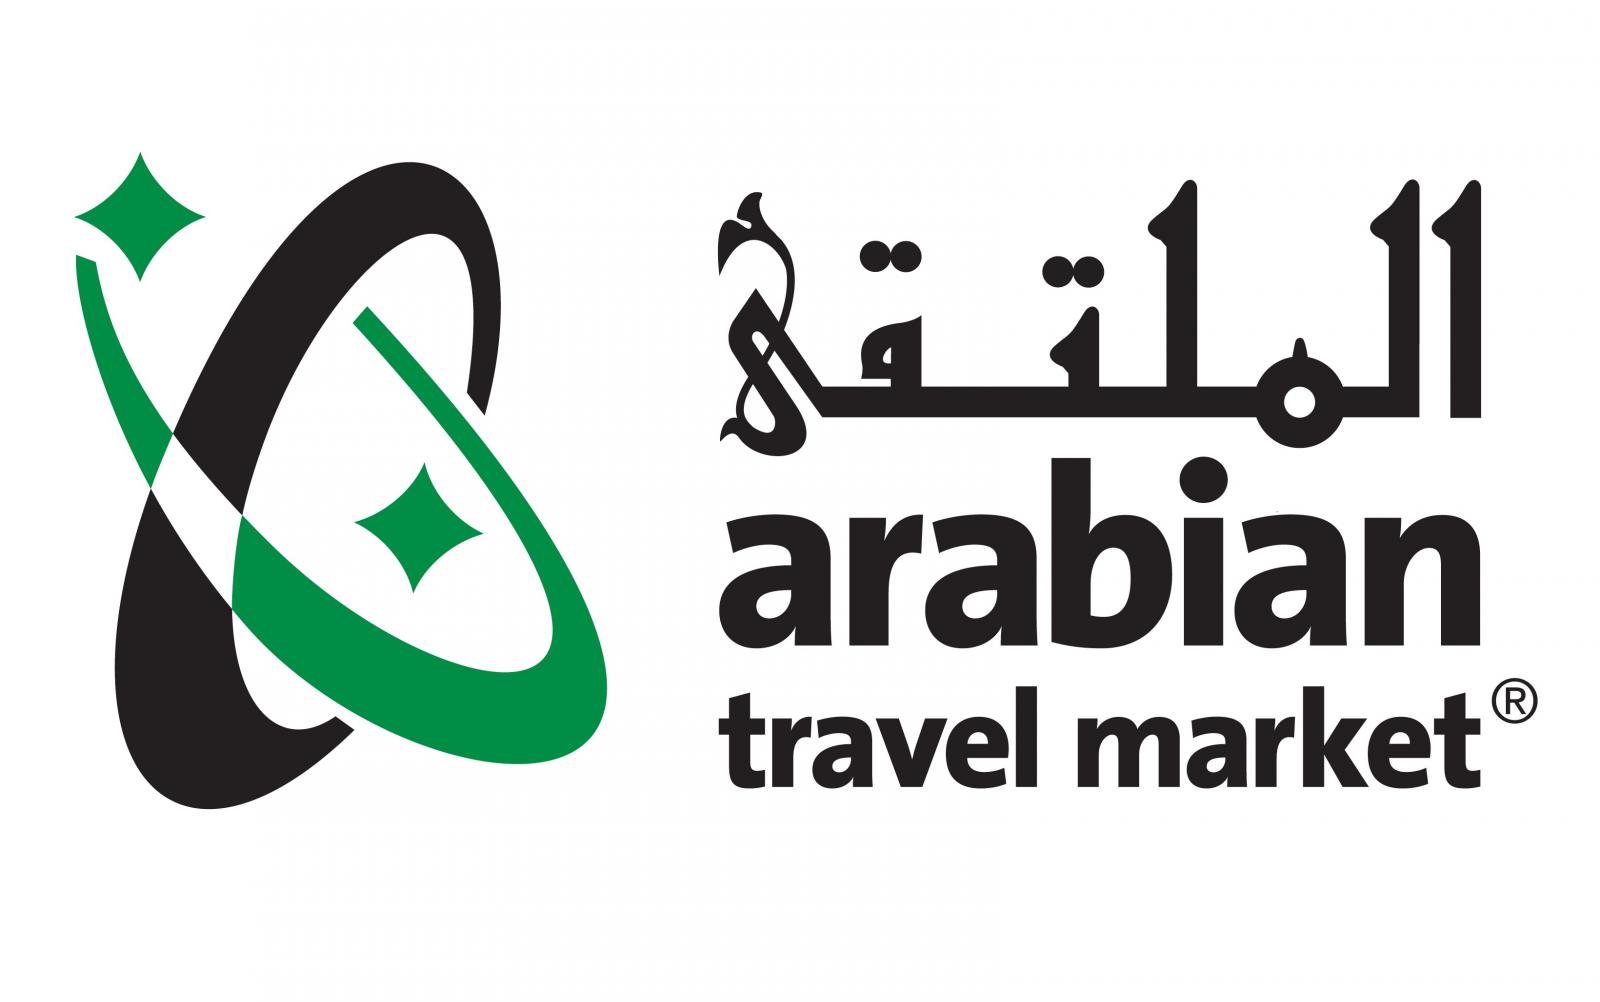 ARABIAN TRAVEL MARKET 2015 jpeg 2018 png 2019 jpg 2017 gif 2020